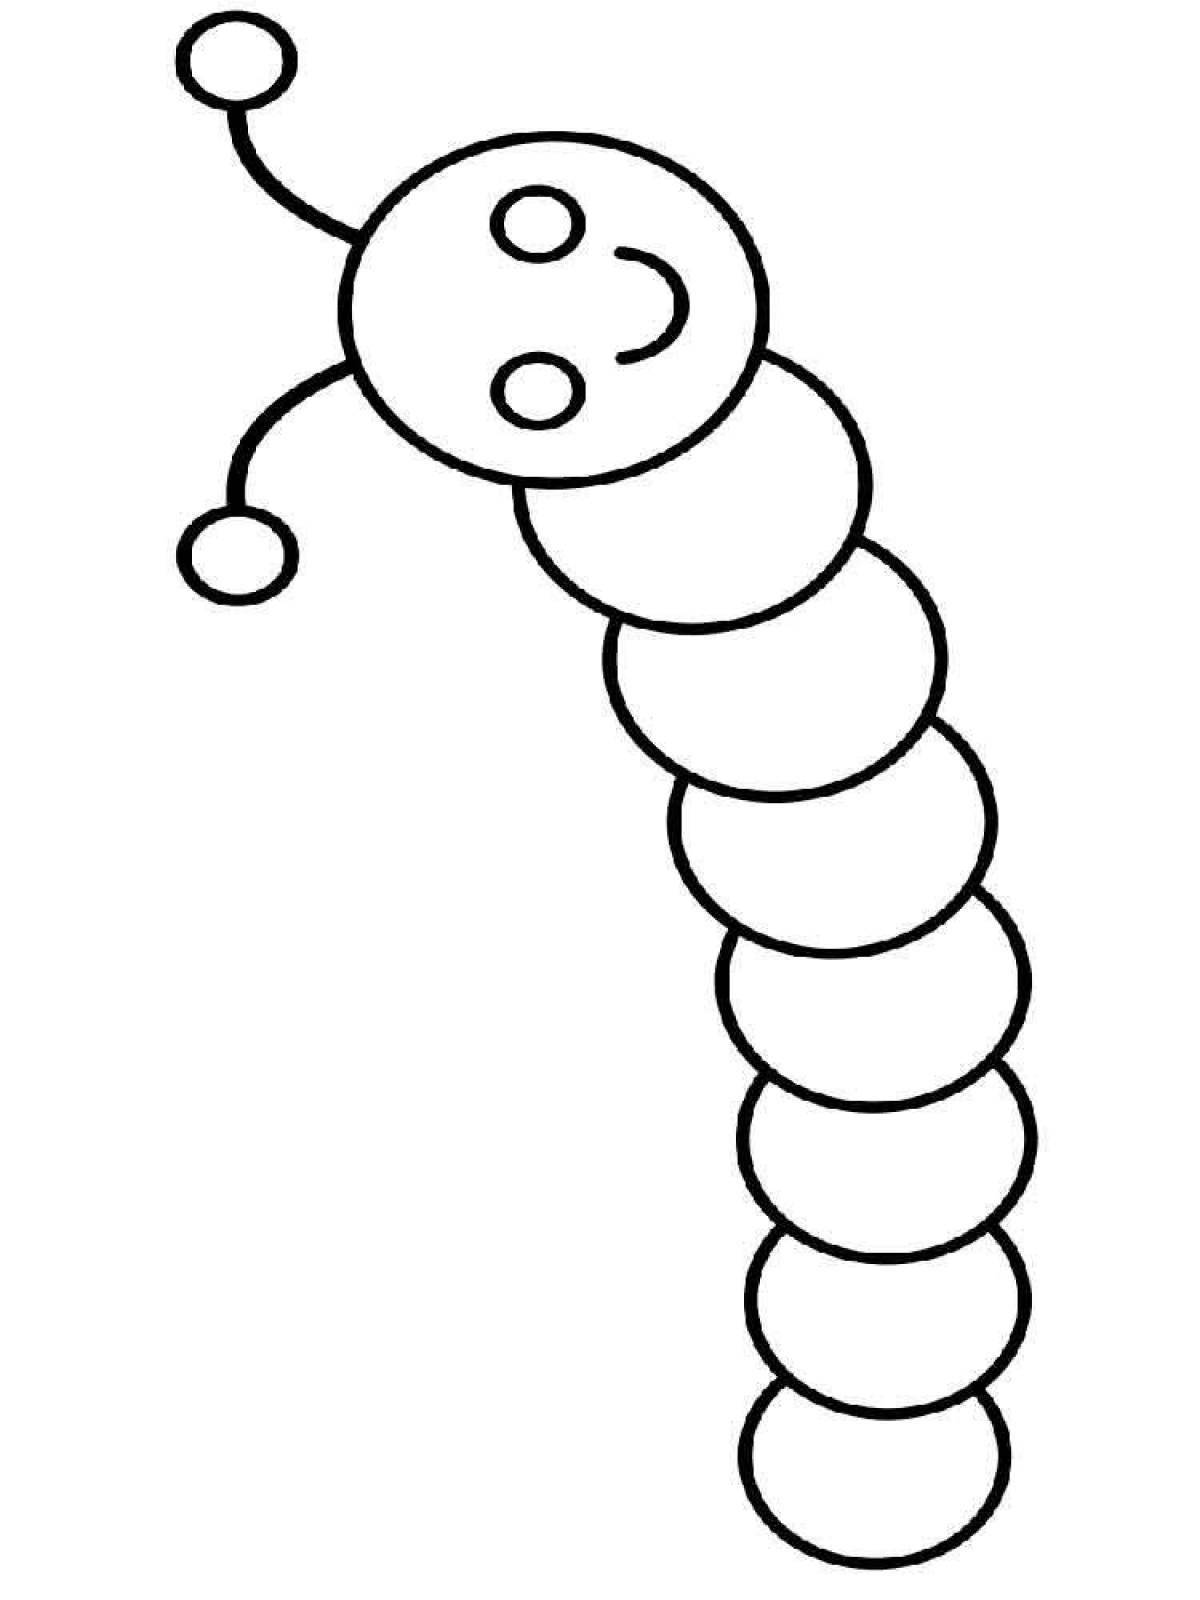 An interesting caterpillar coloring book for preschoolers